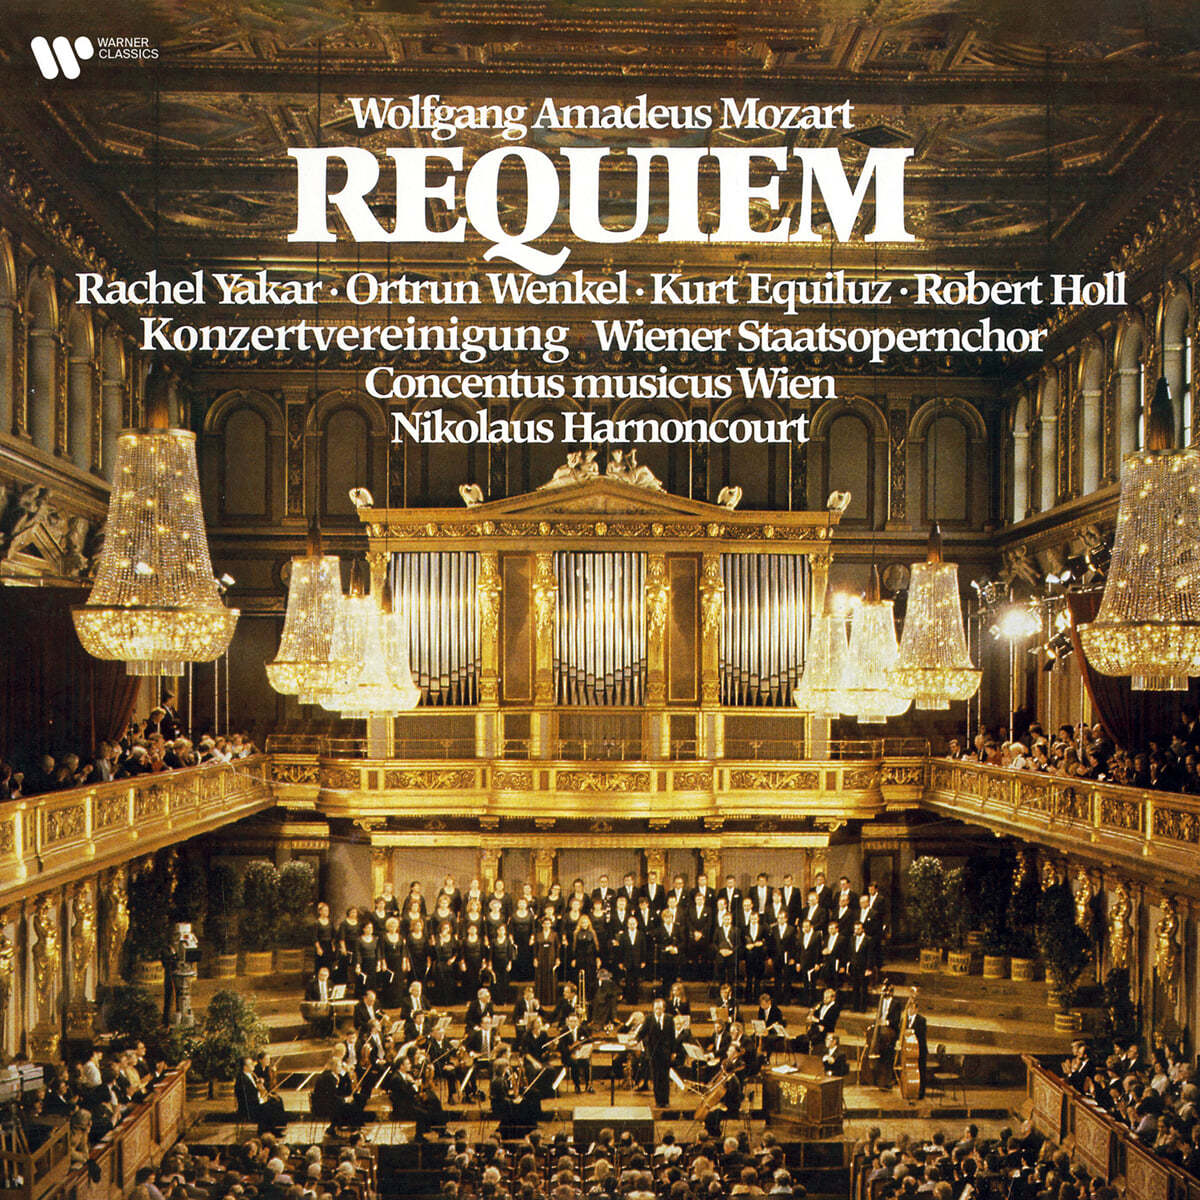 Nikolaus Harnoncourt 모차르트: 레퀴엠 - 아르농쿠르 (Mozart: Requiem K.626) 